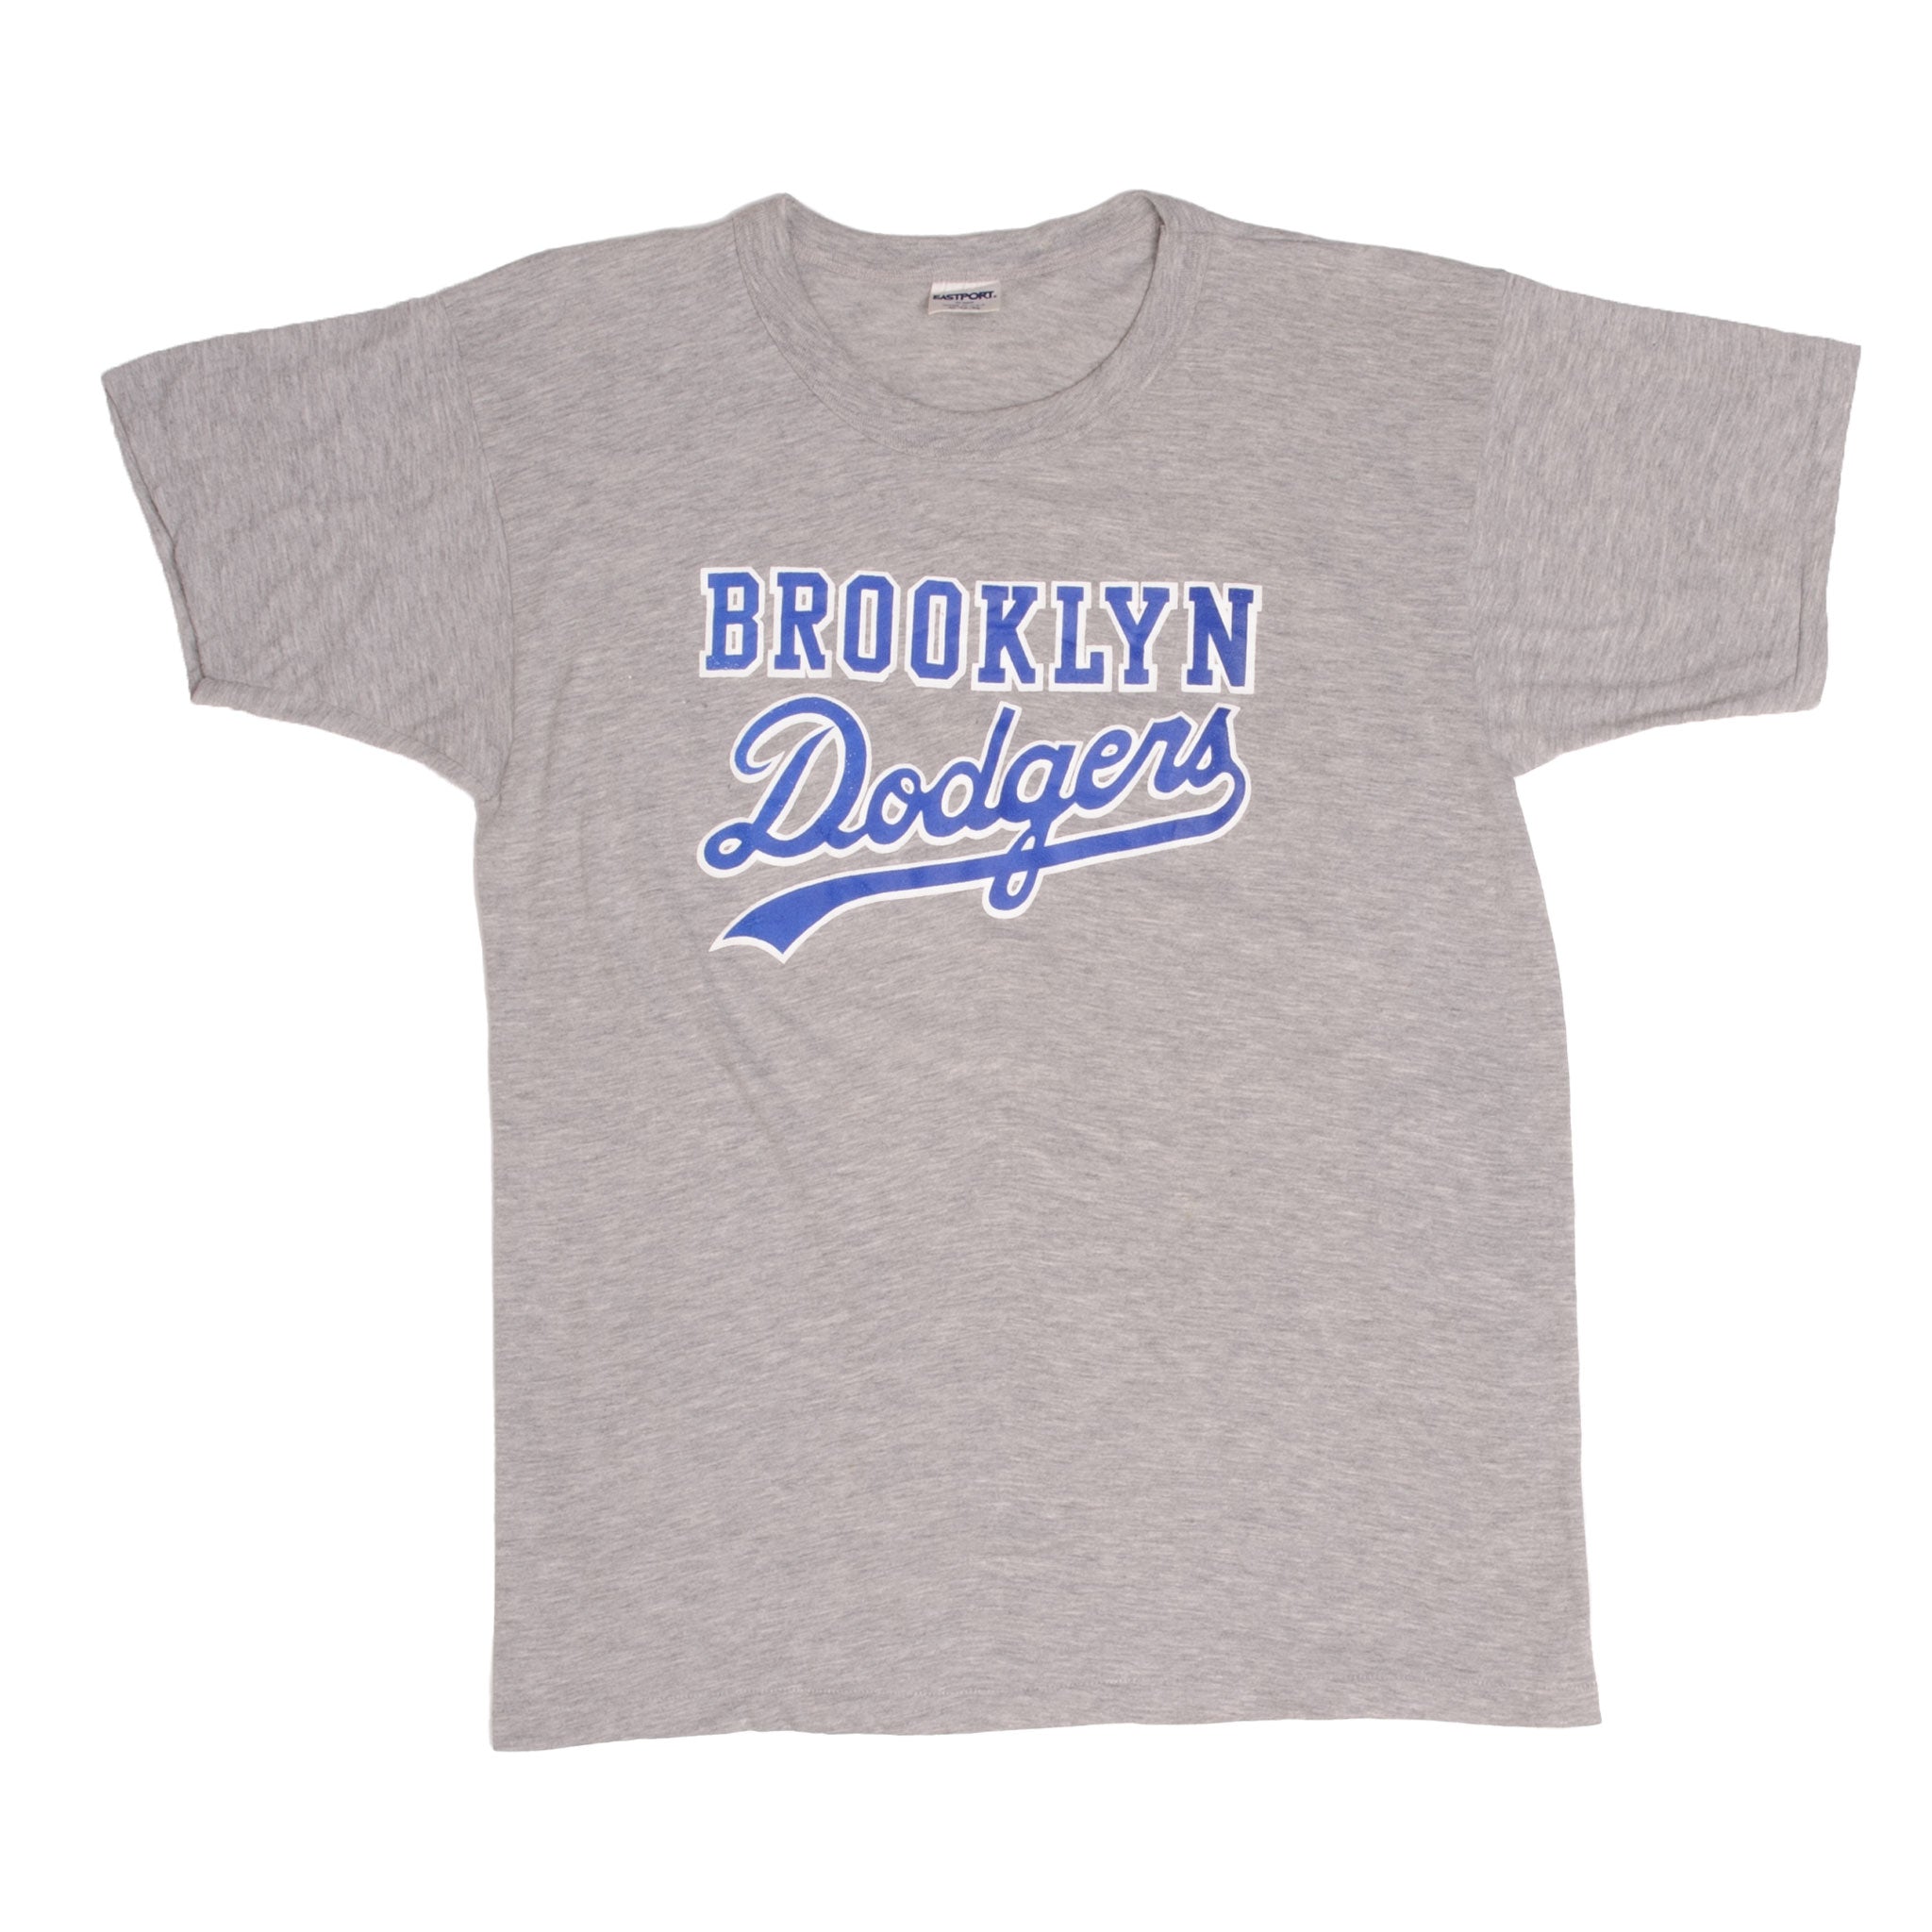 Vintage MLB Brooklyn Dogers Tee Shirt 1990s Size Medium Made in USA